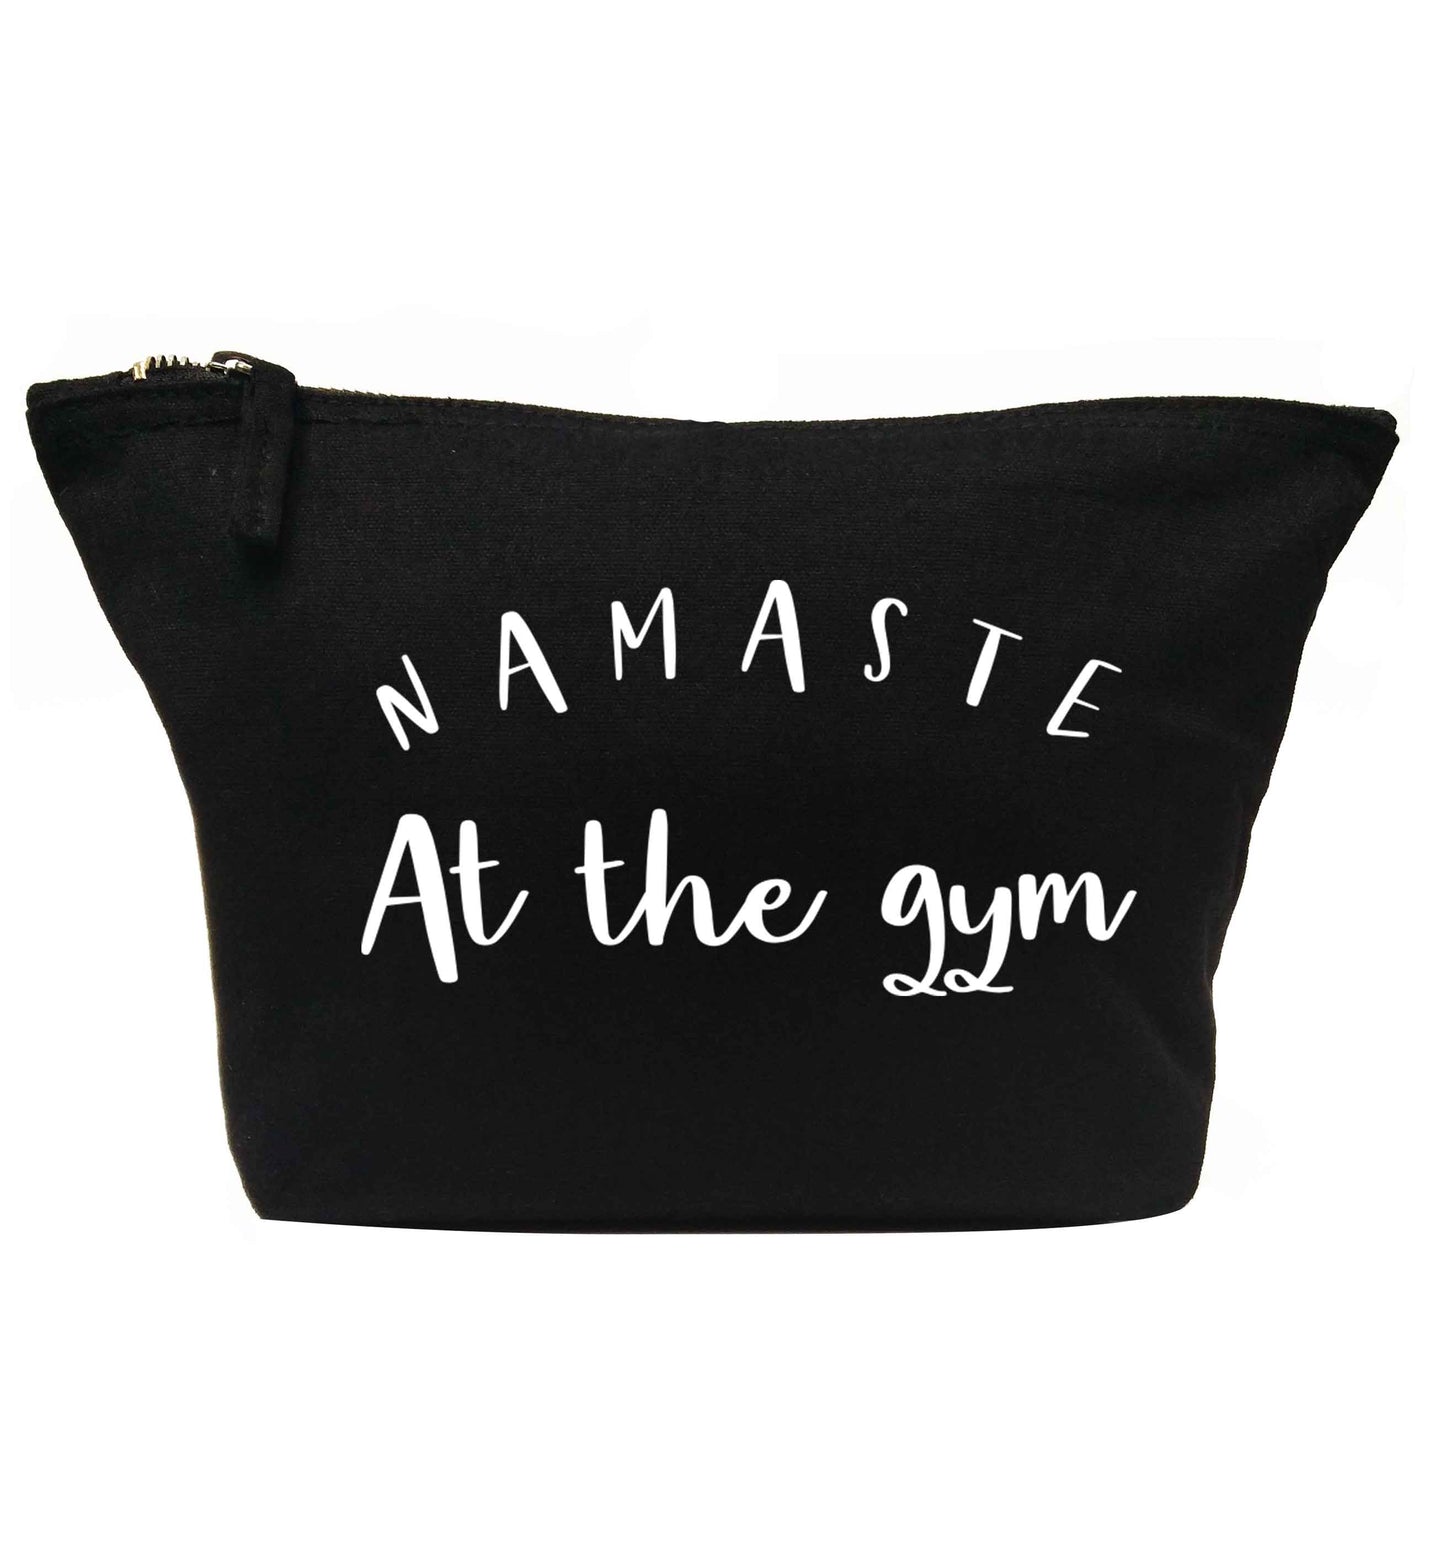 Namaste at the gym | makeup / wash bag